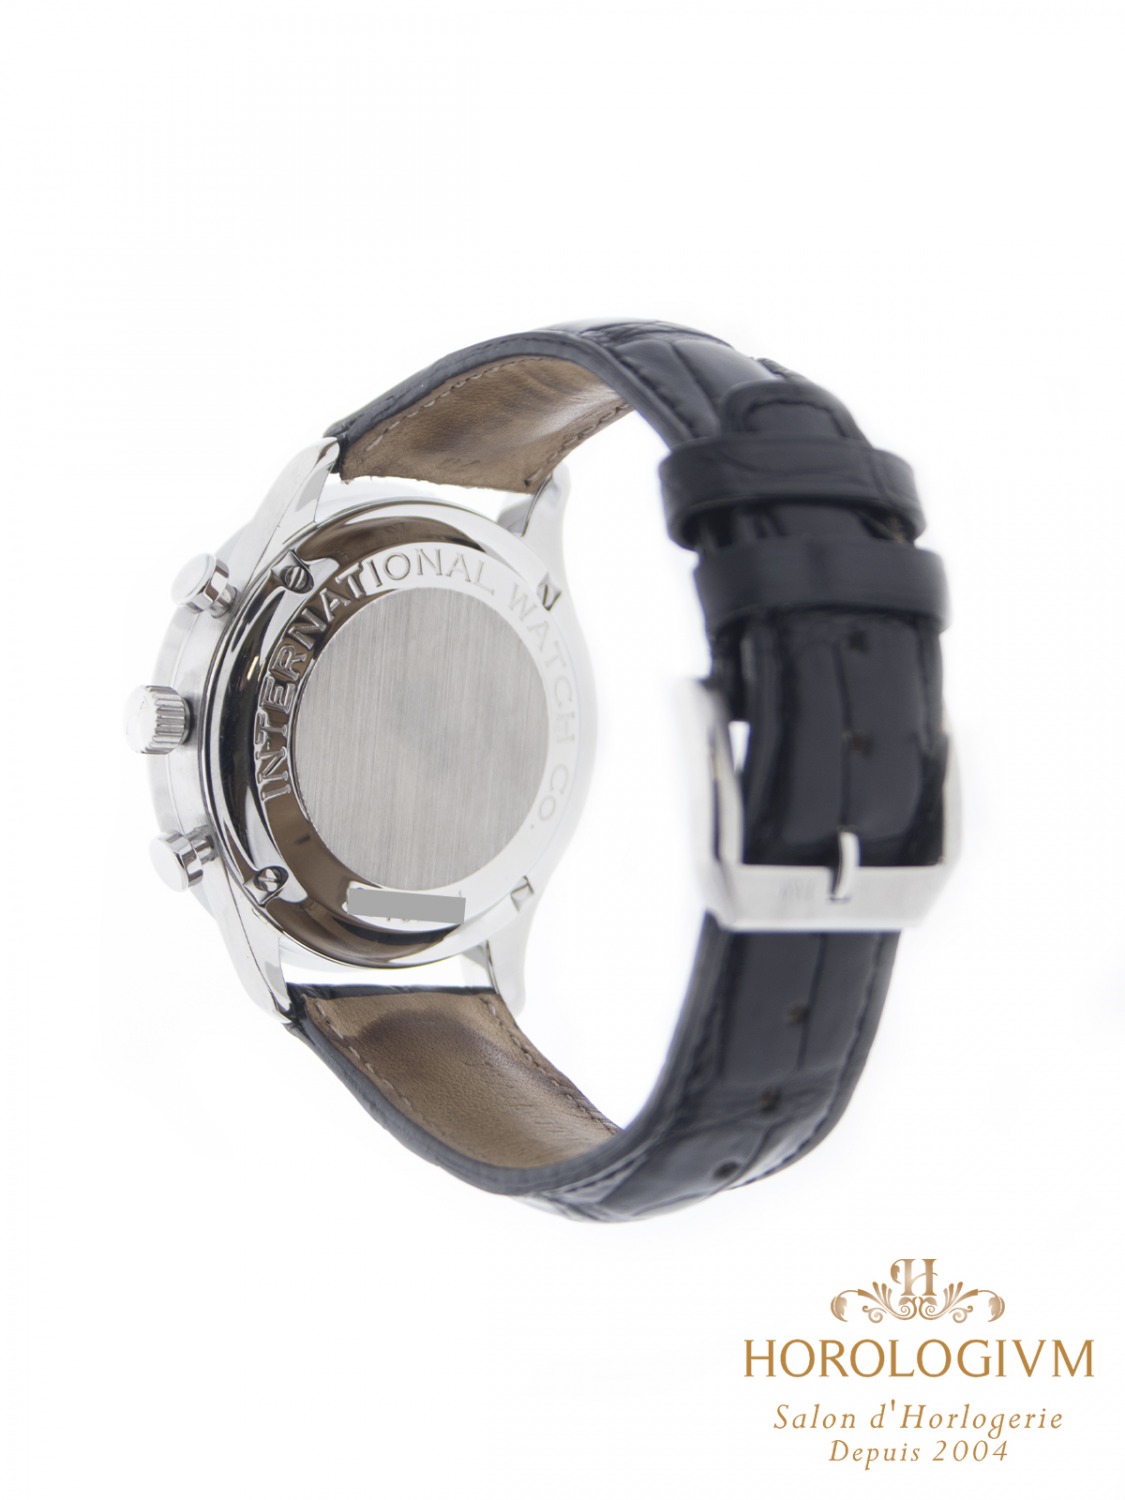 IWC Portugieser Chronograph 41MM watch, silver